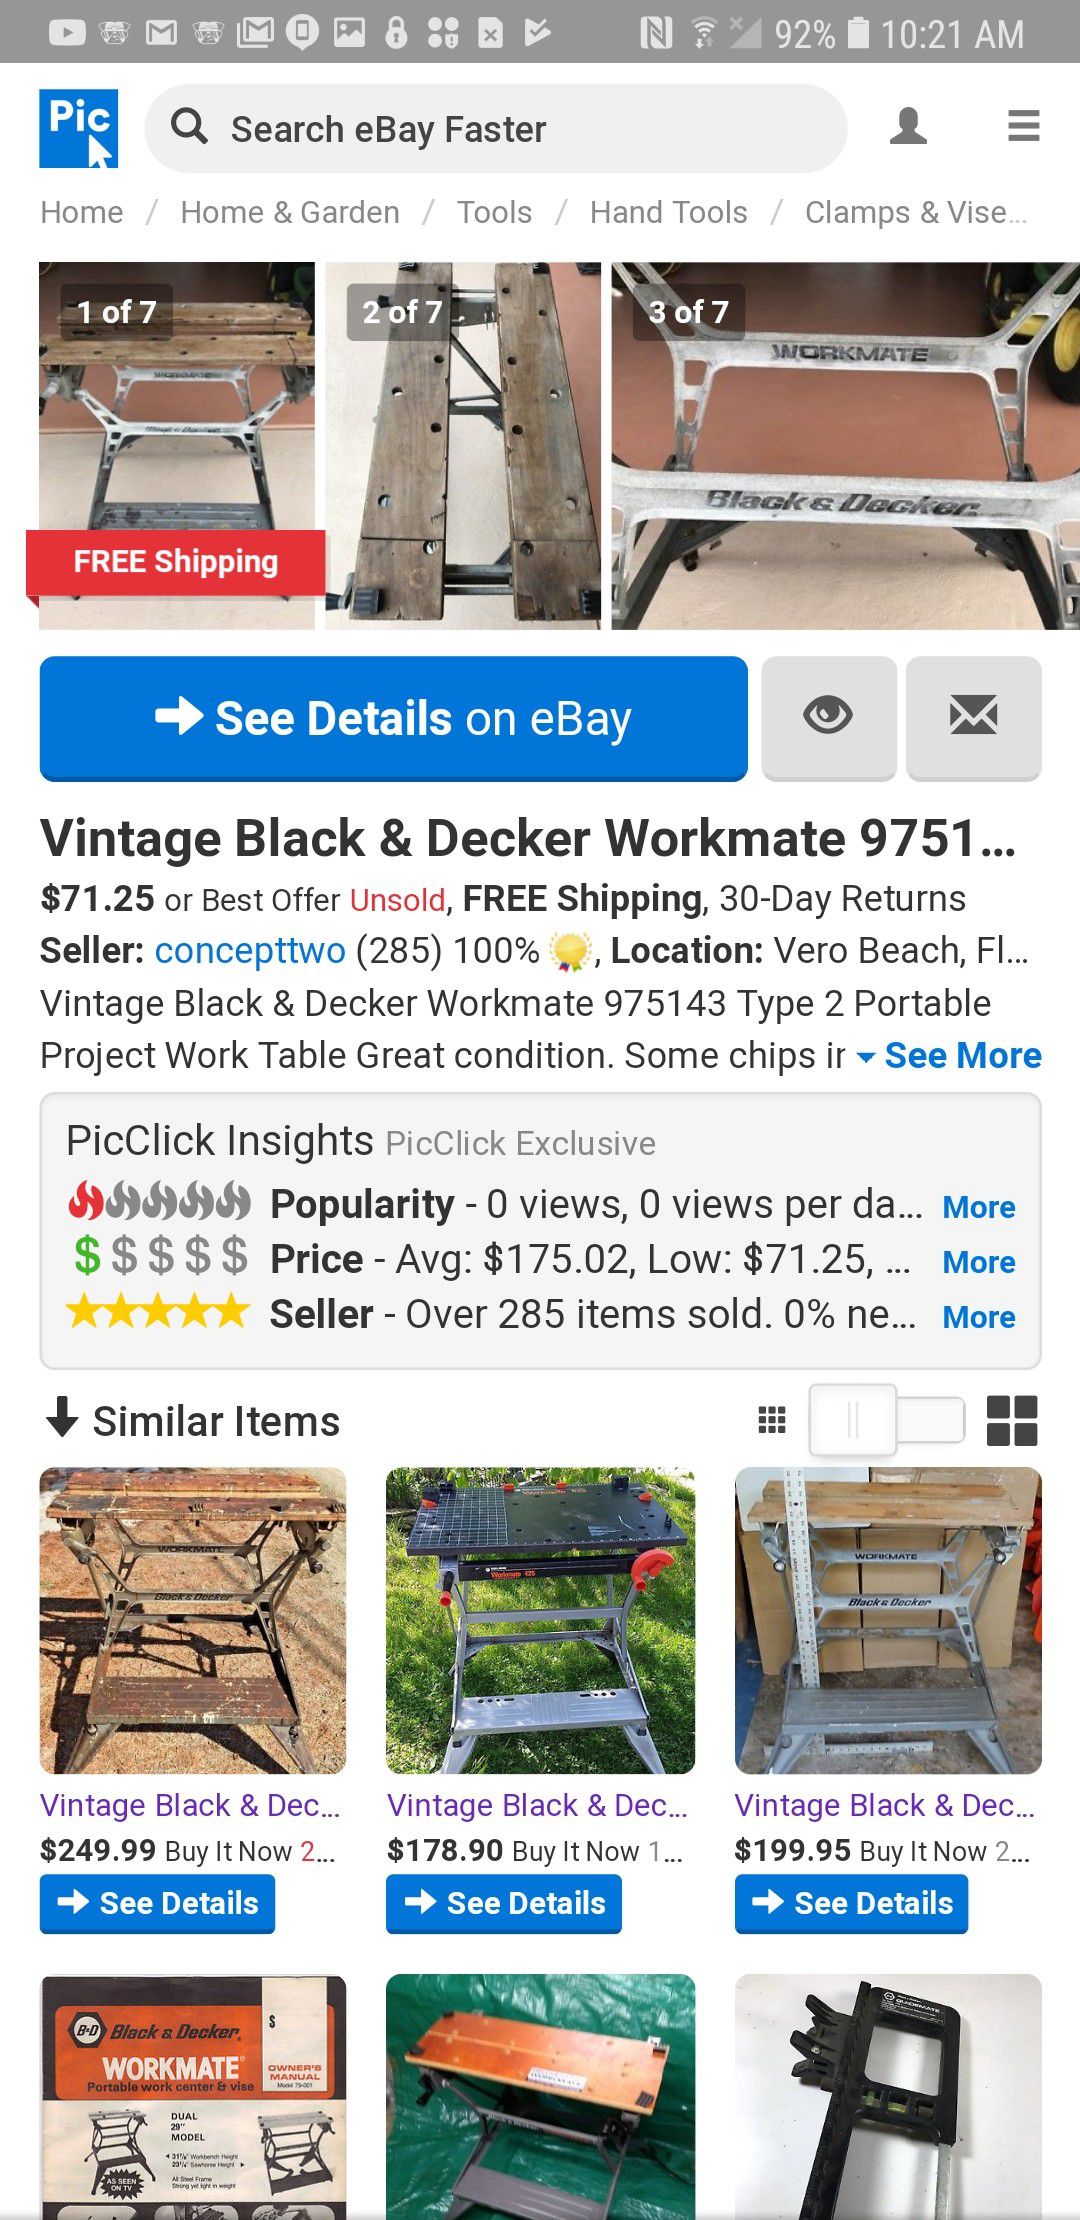 Black & Decker Workmate 425 for Sale in Melbourne, FL - OfferUp